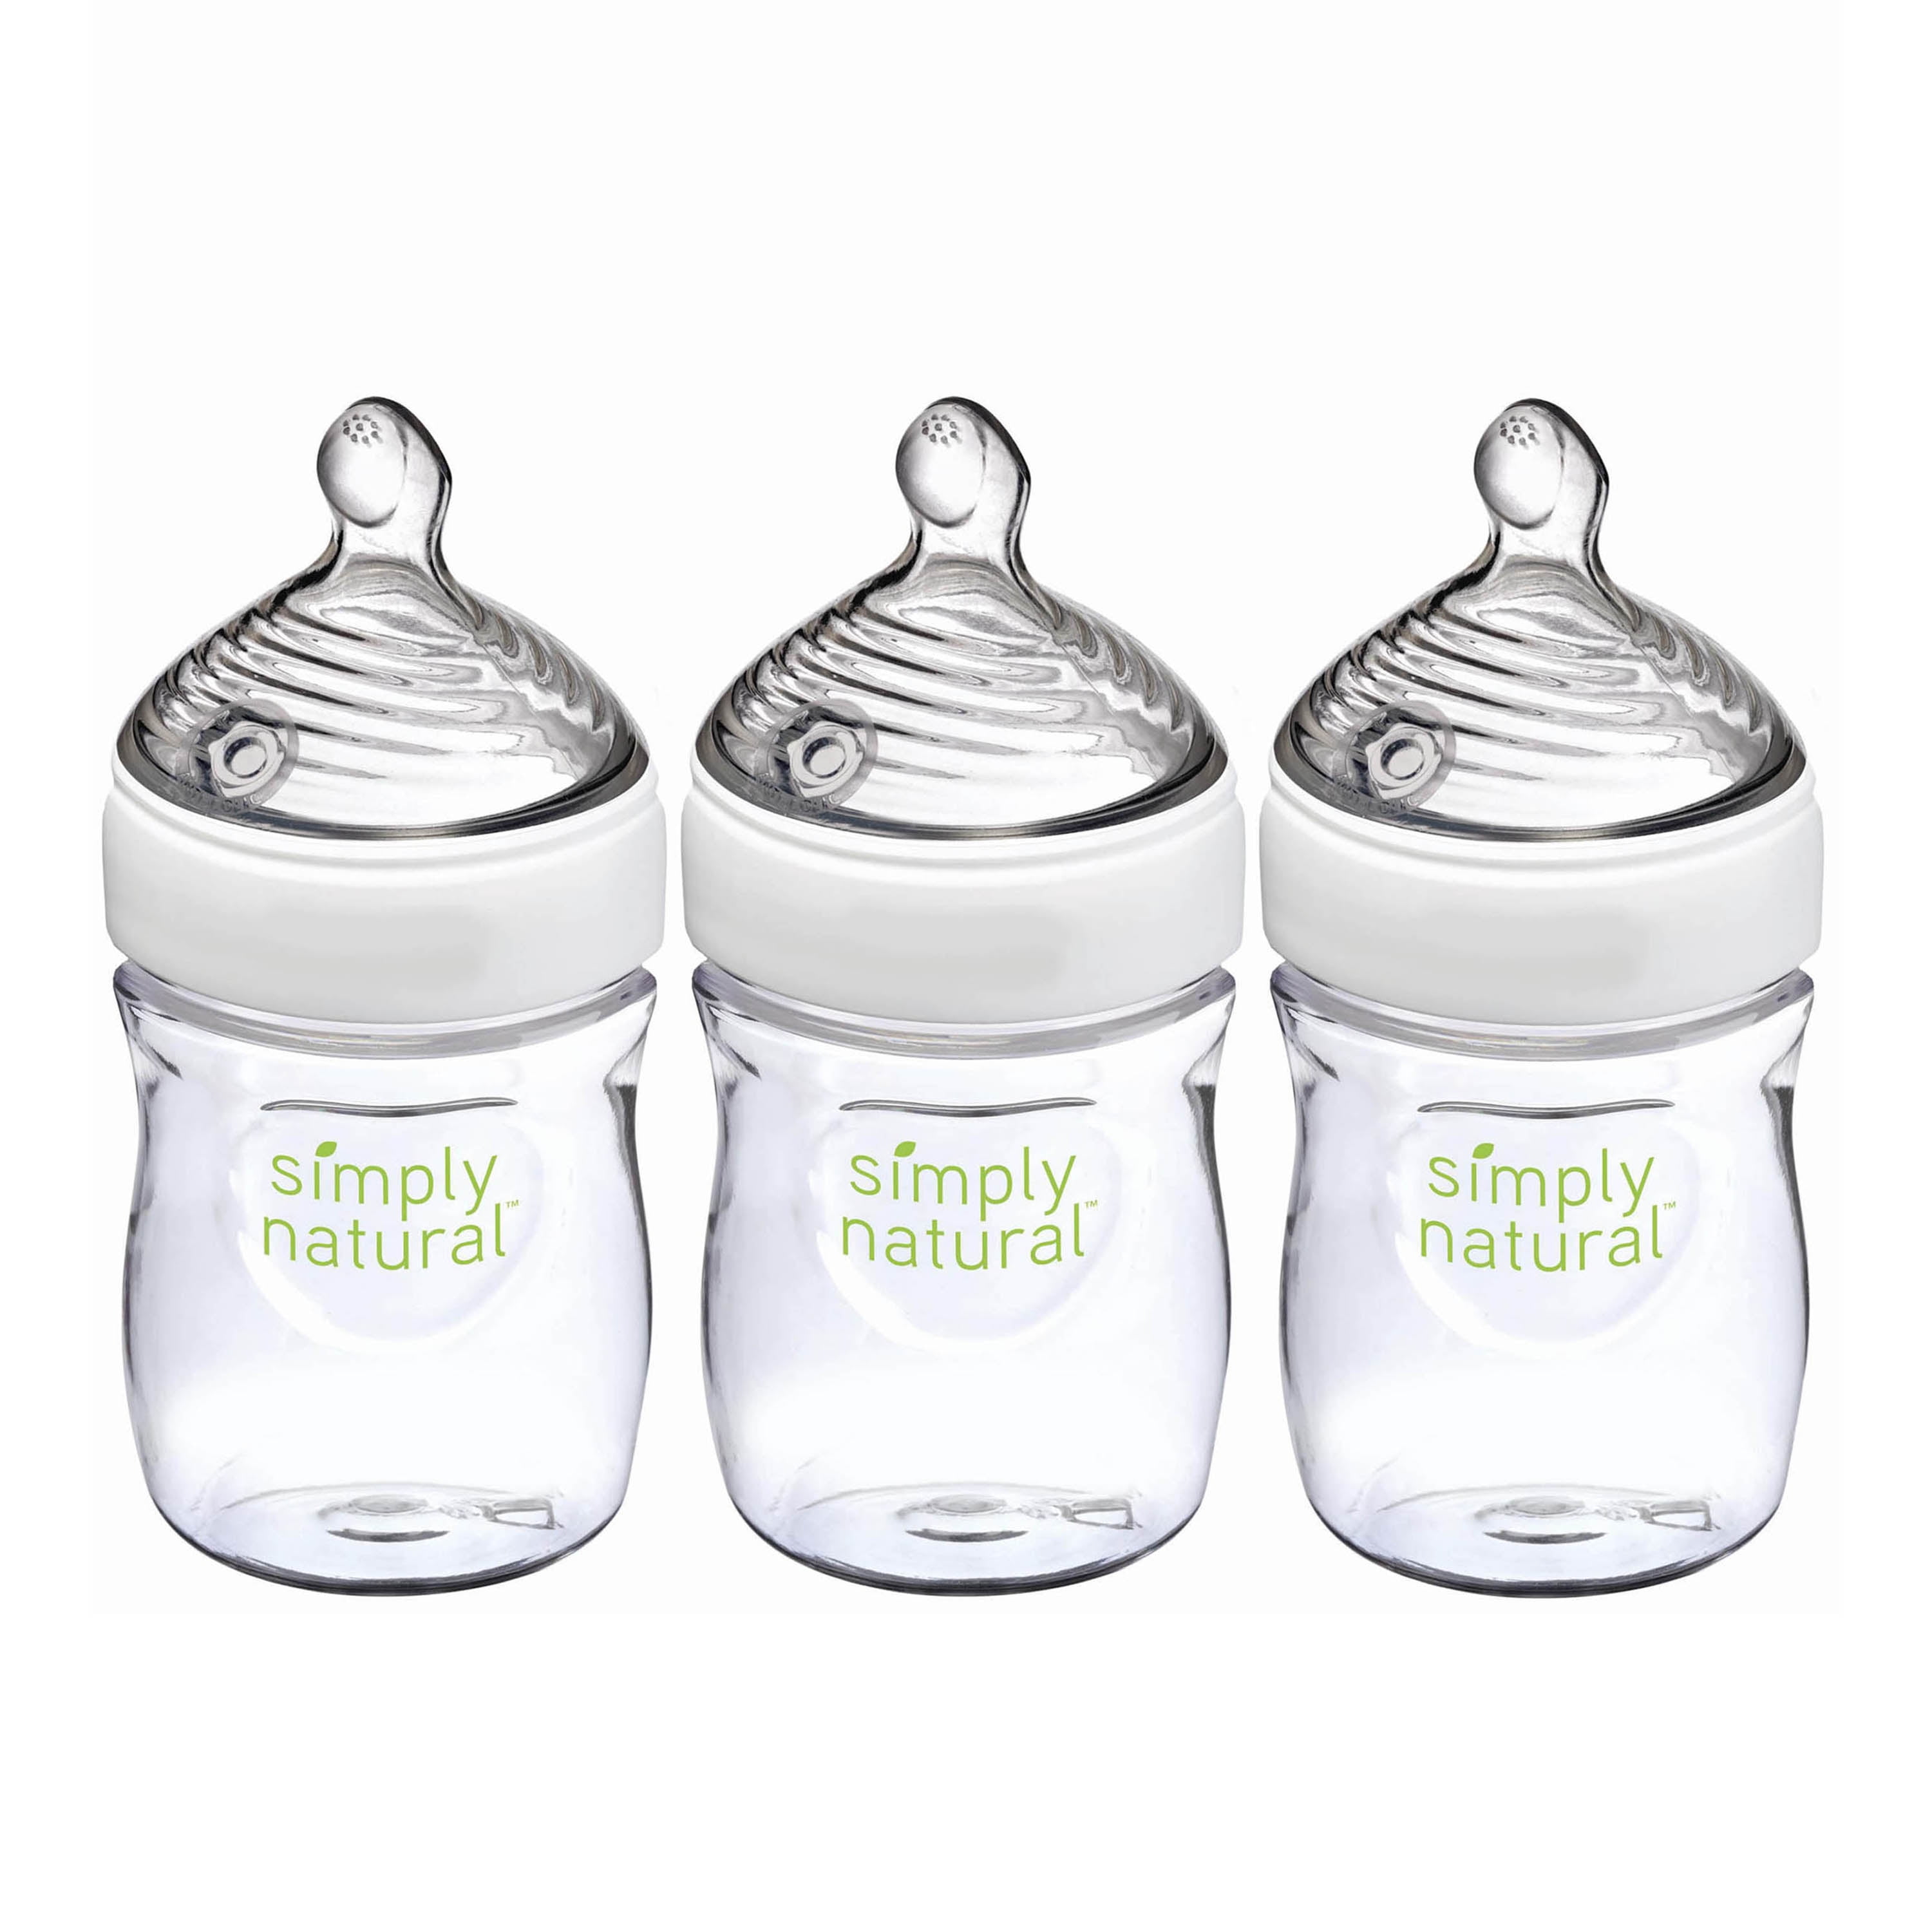 NUK Simply Natural Baby Bottles, 5 oz, 3-Pack - Walmart.com